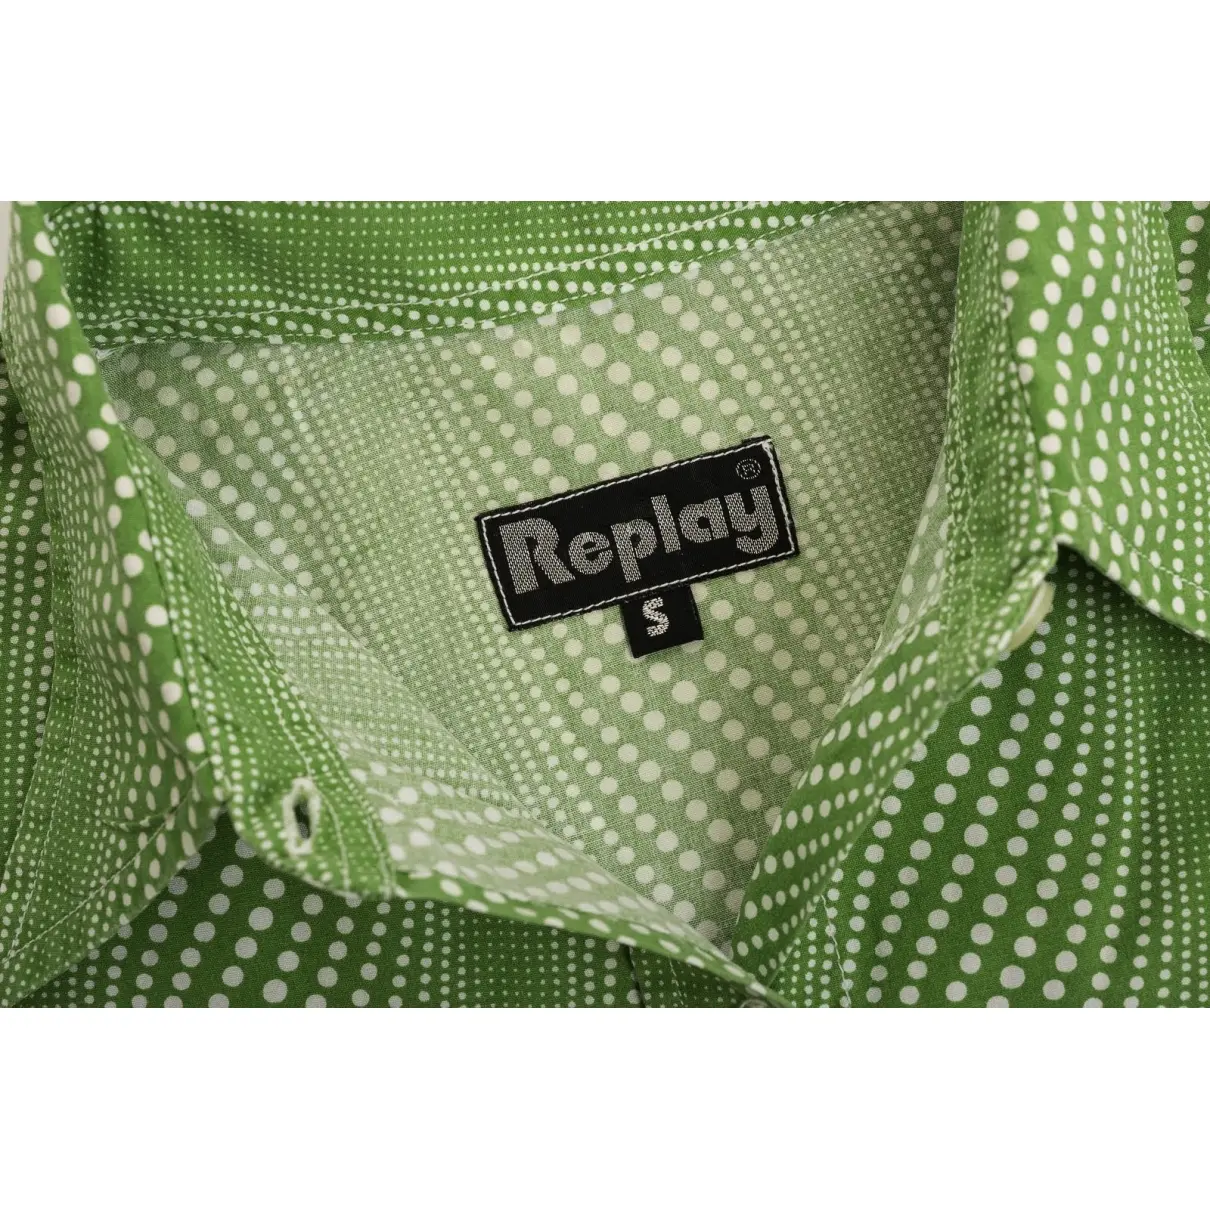 Buy Replay Shirt online